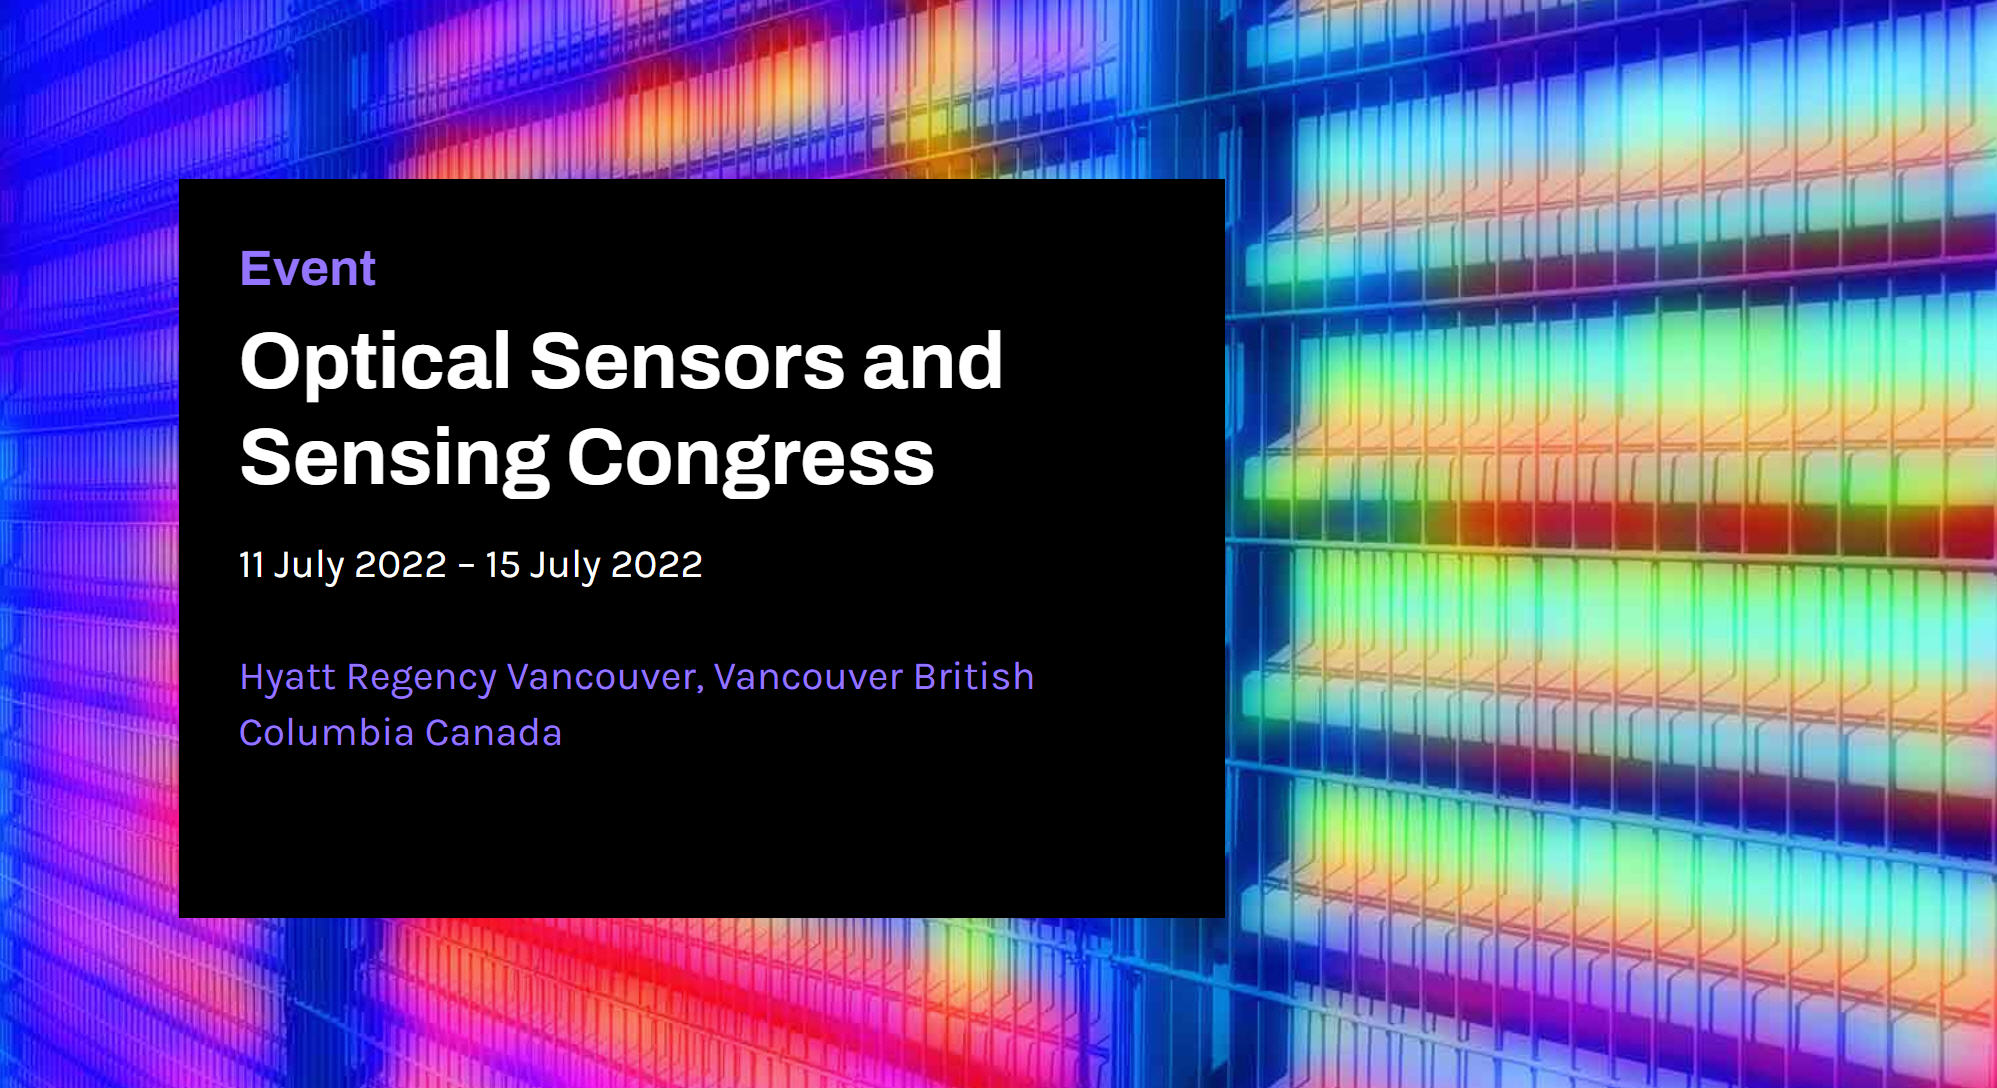 Dr. Giacomo Vacca To Speak At Optical Sensors And Sensing